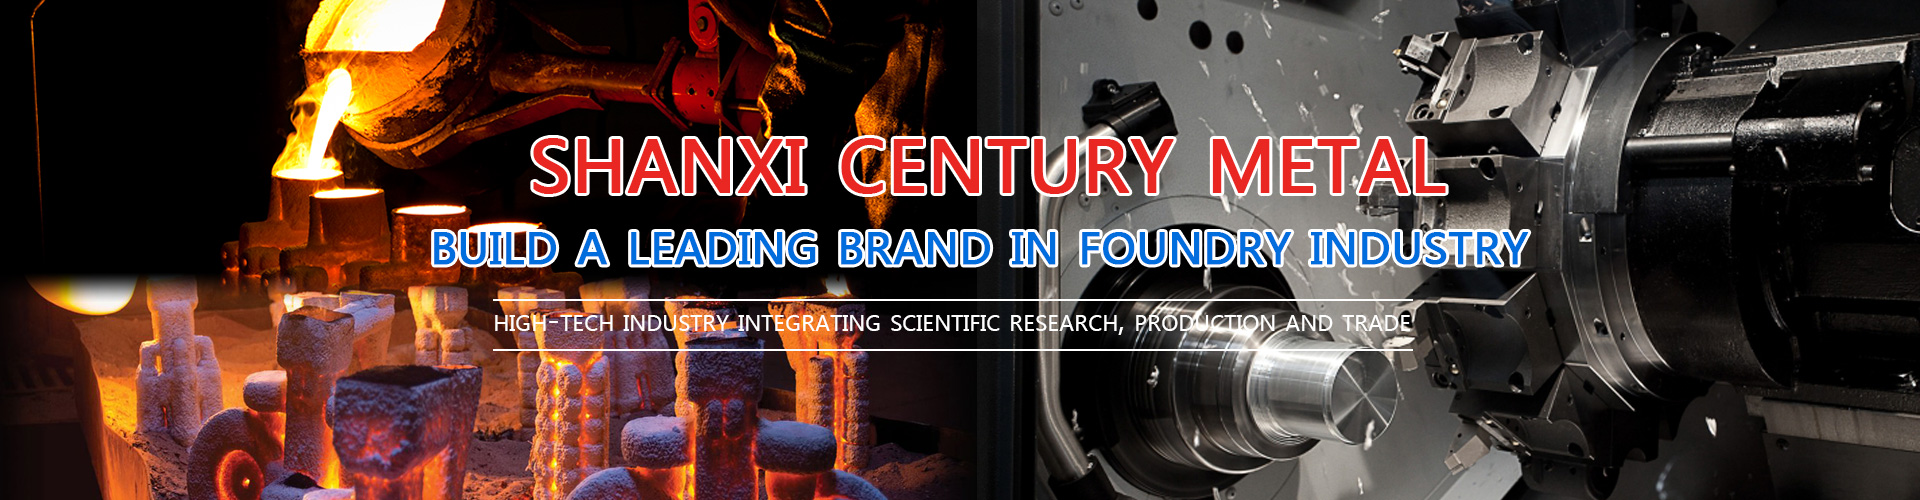  Shanxi Century Metal Industries Inc.